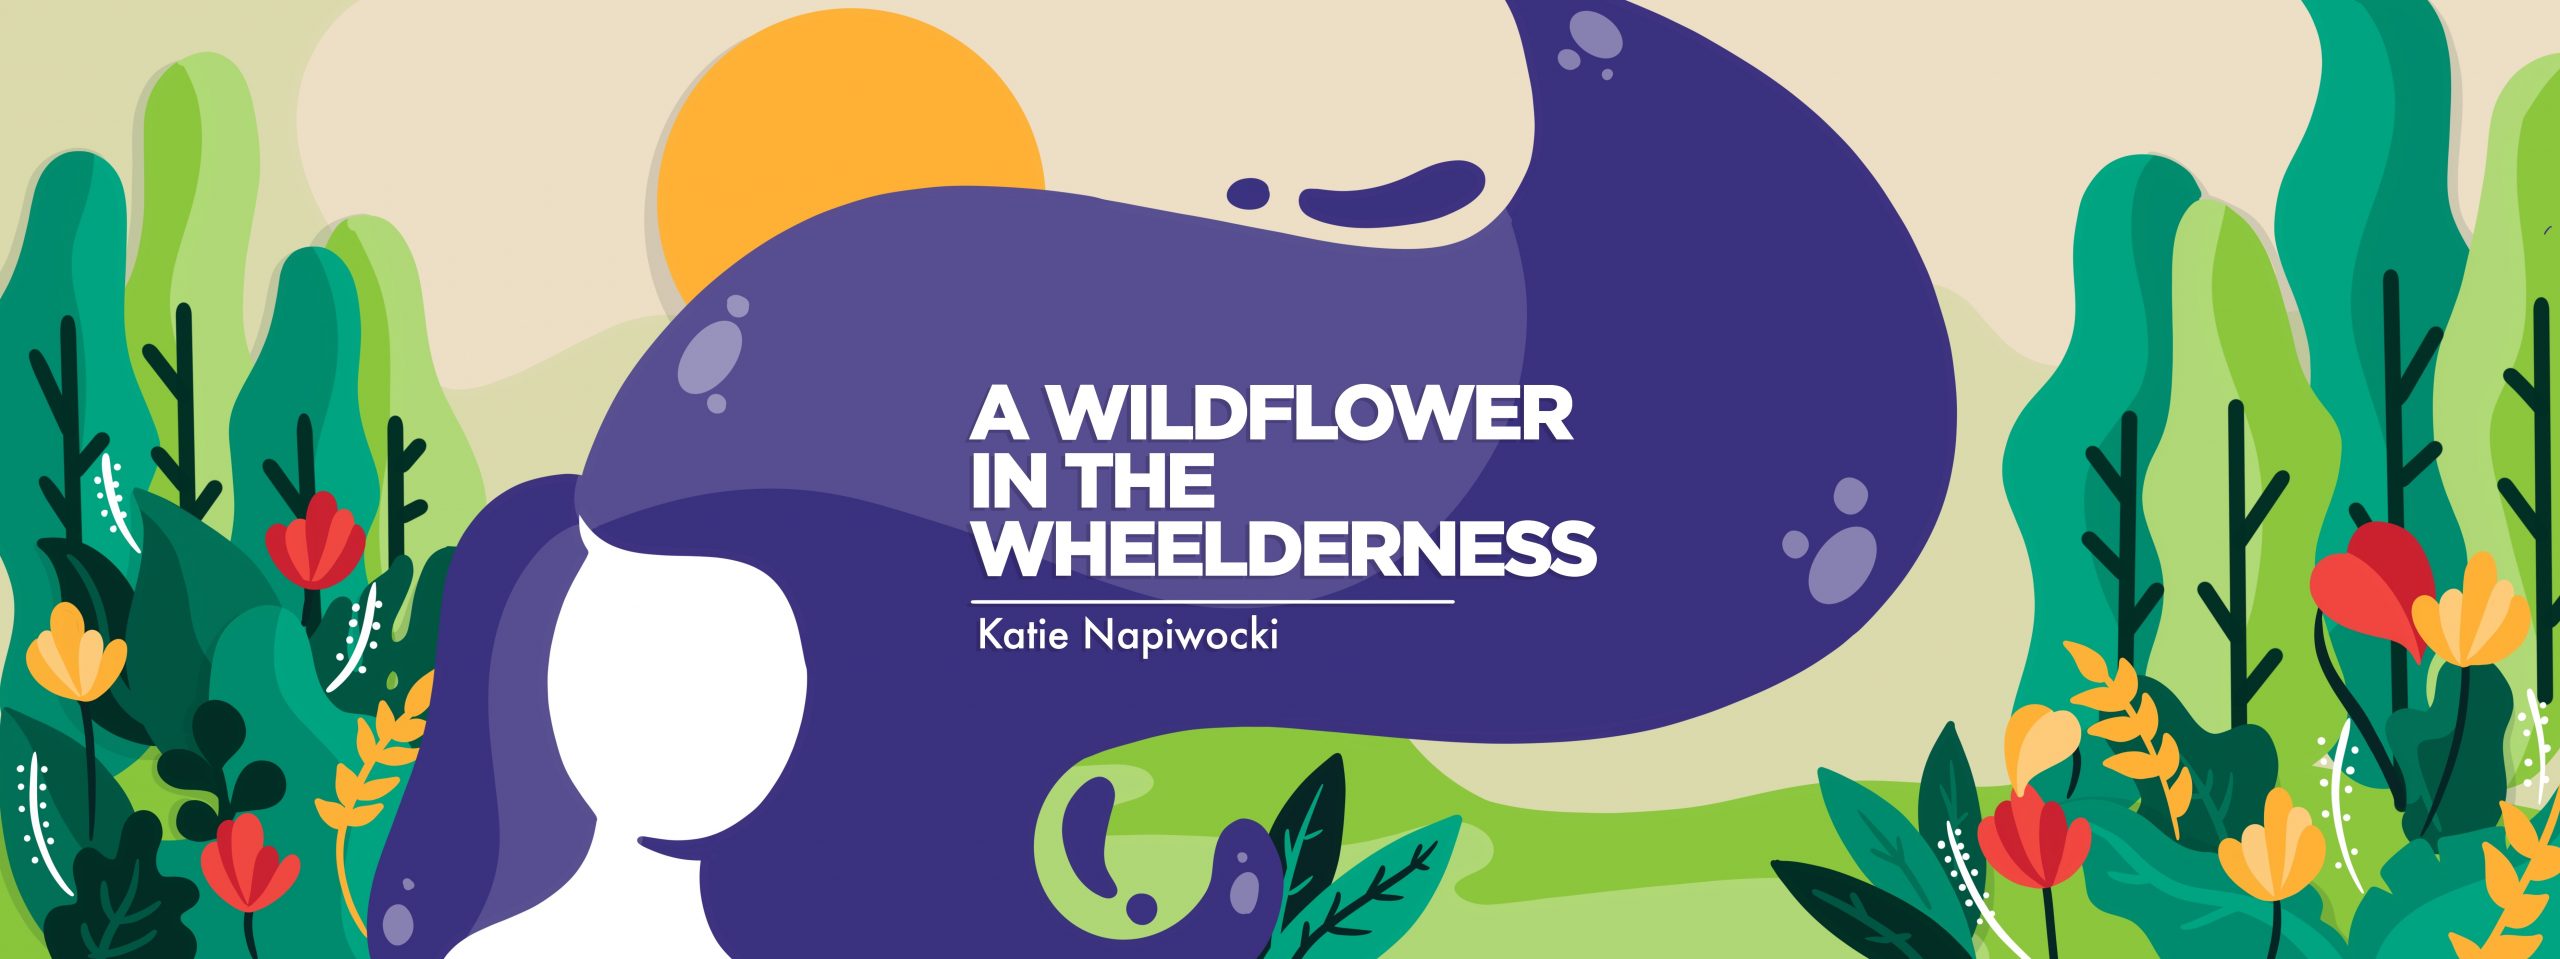 A Wildflower in the Wheelderness